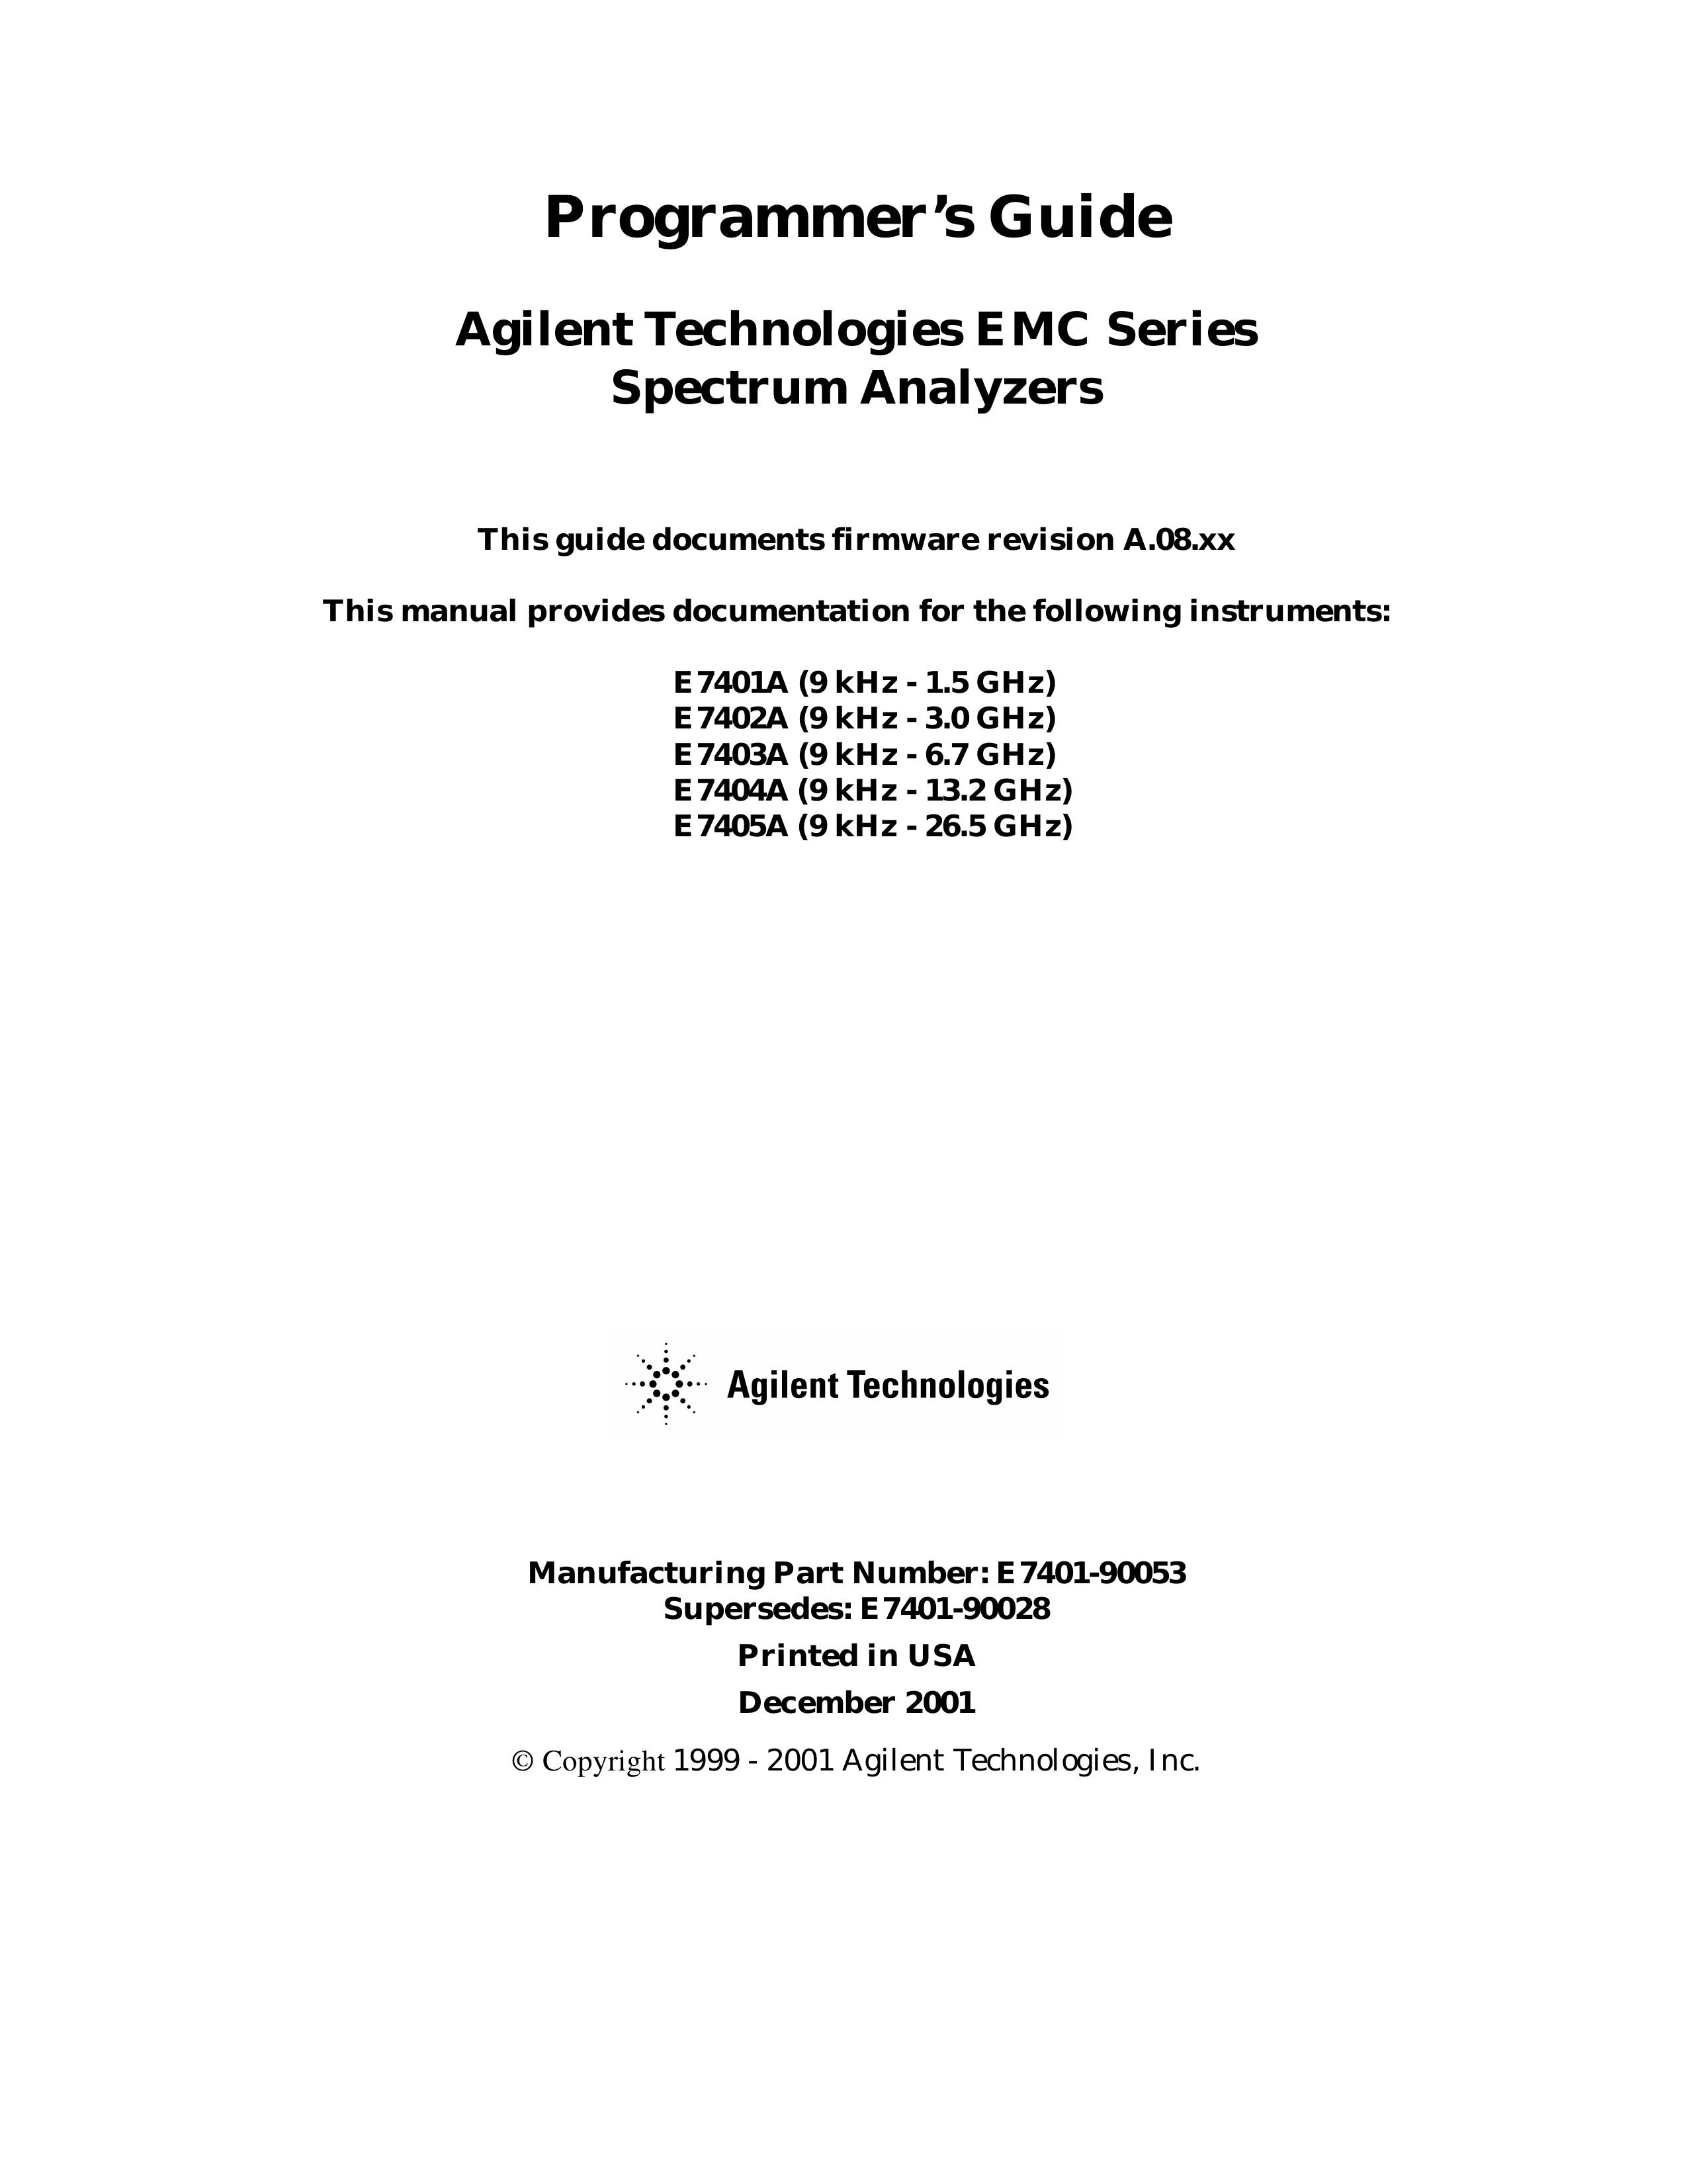 Agilent Technologies Model A.08.xx Water Dispenser User Manual